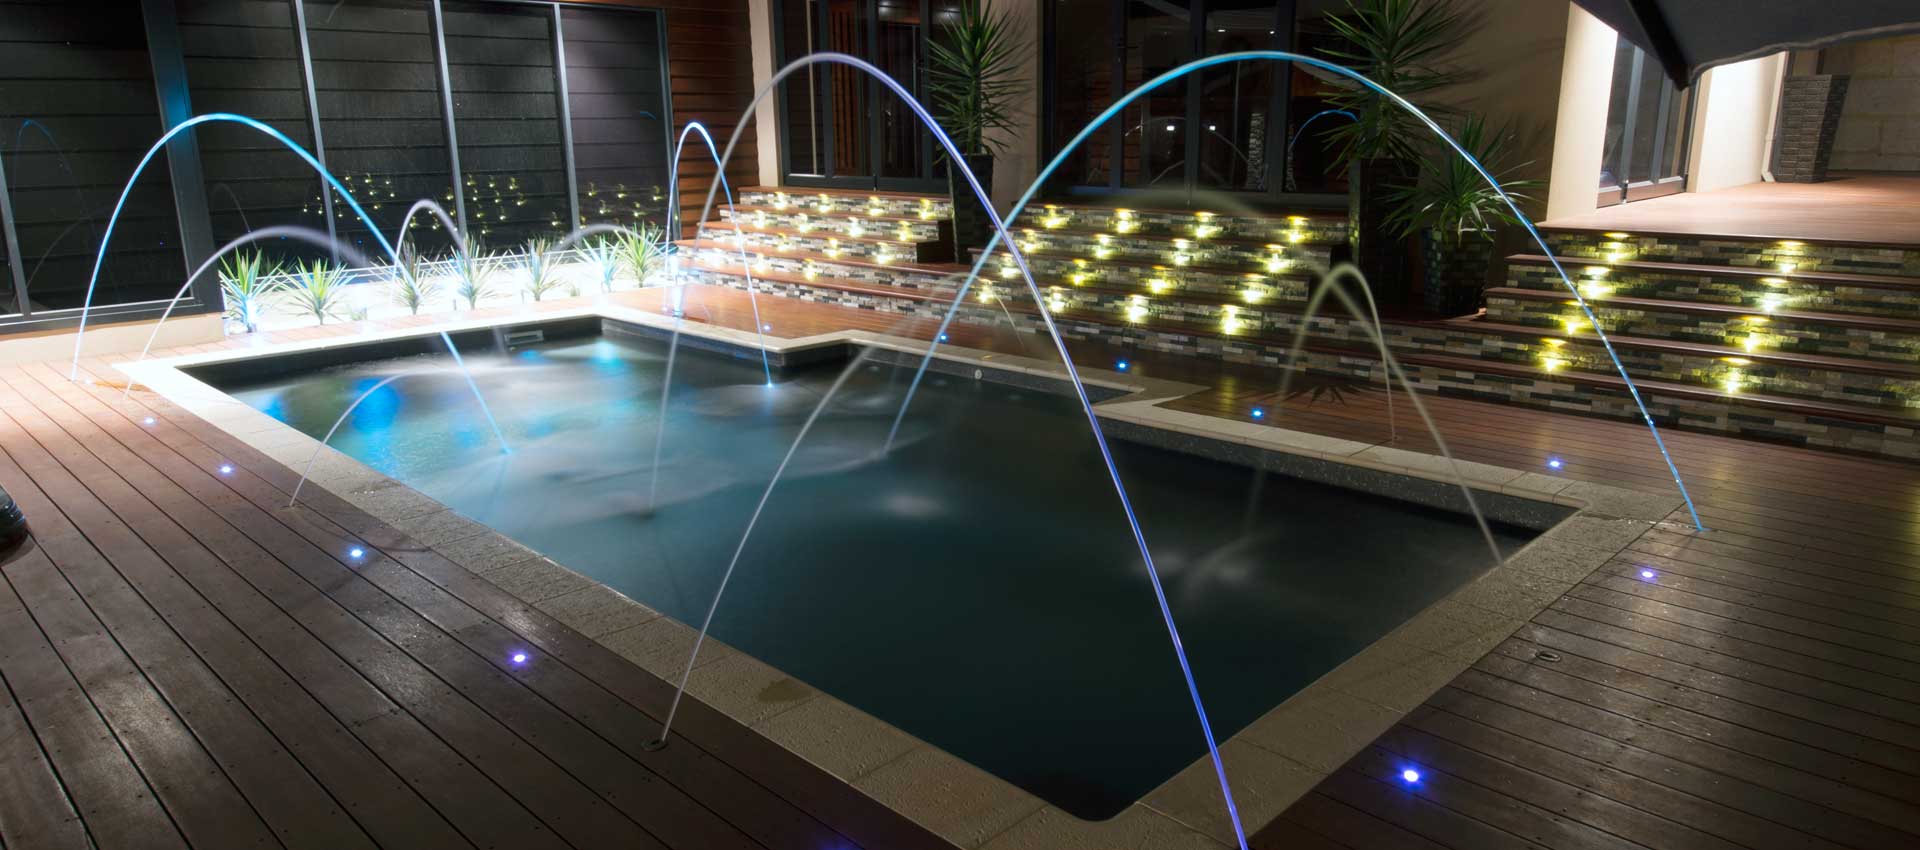 Swimming Pool - LED Light System